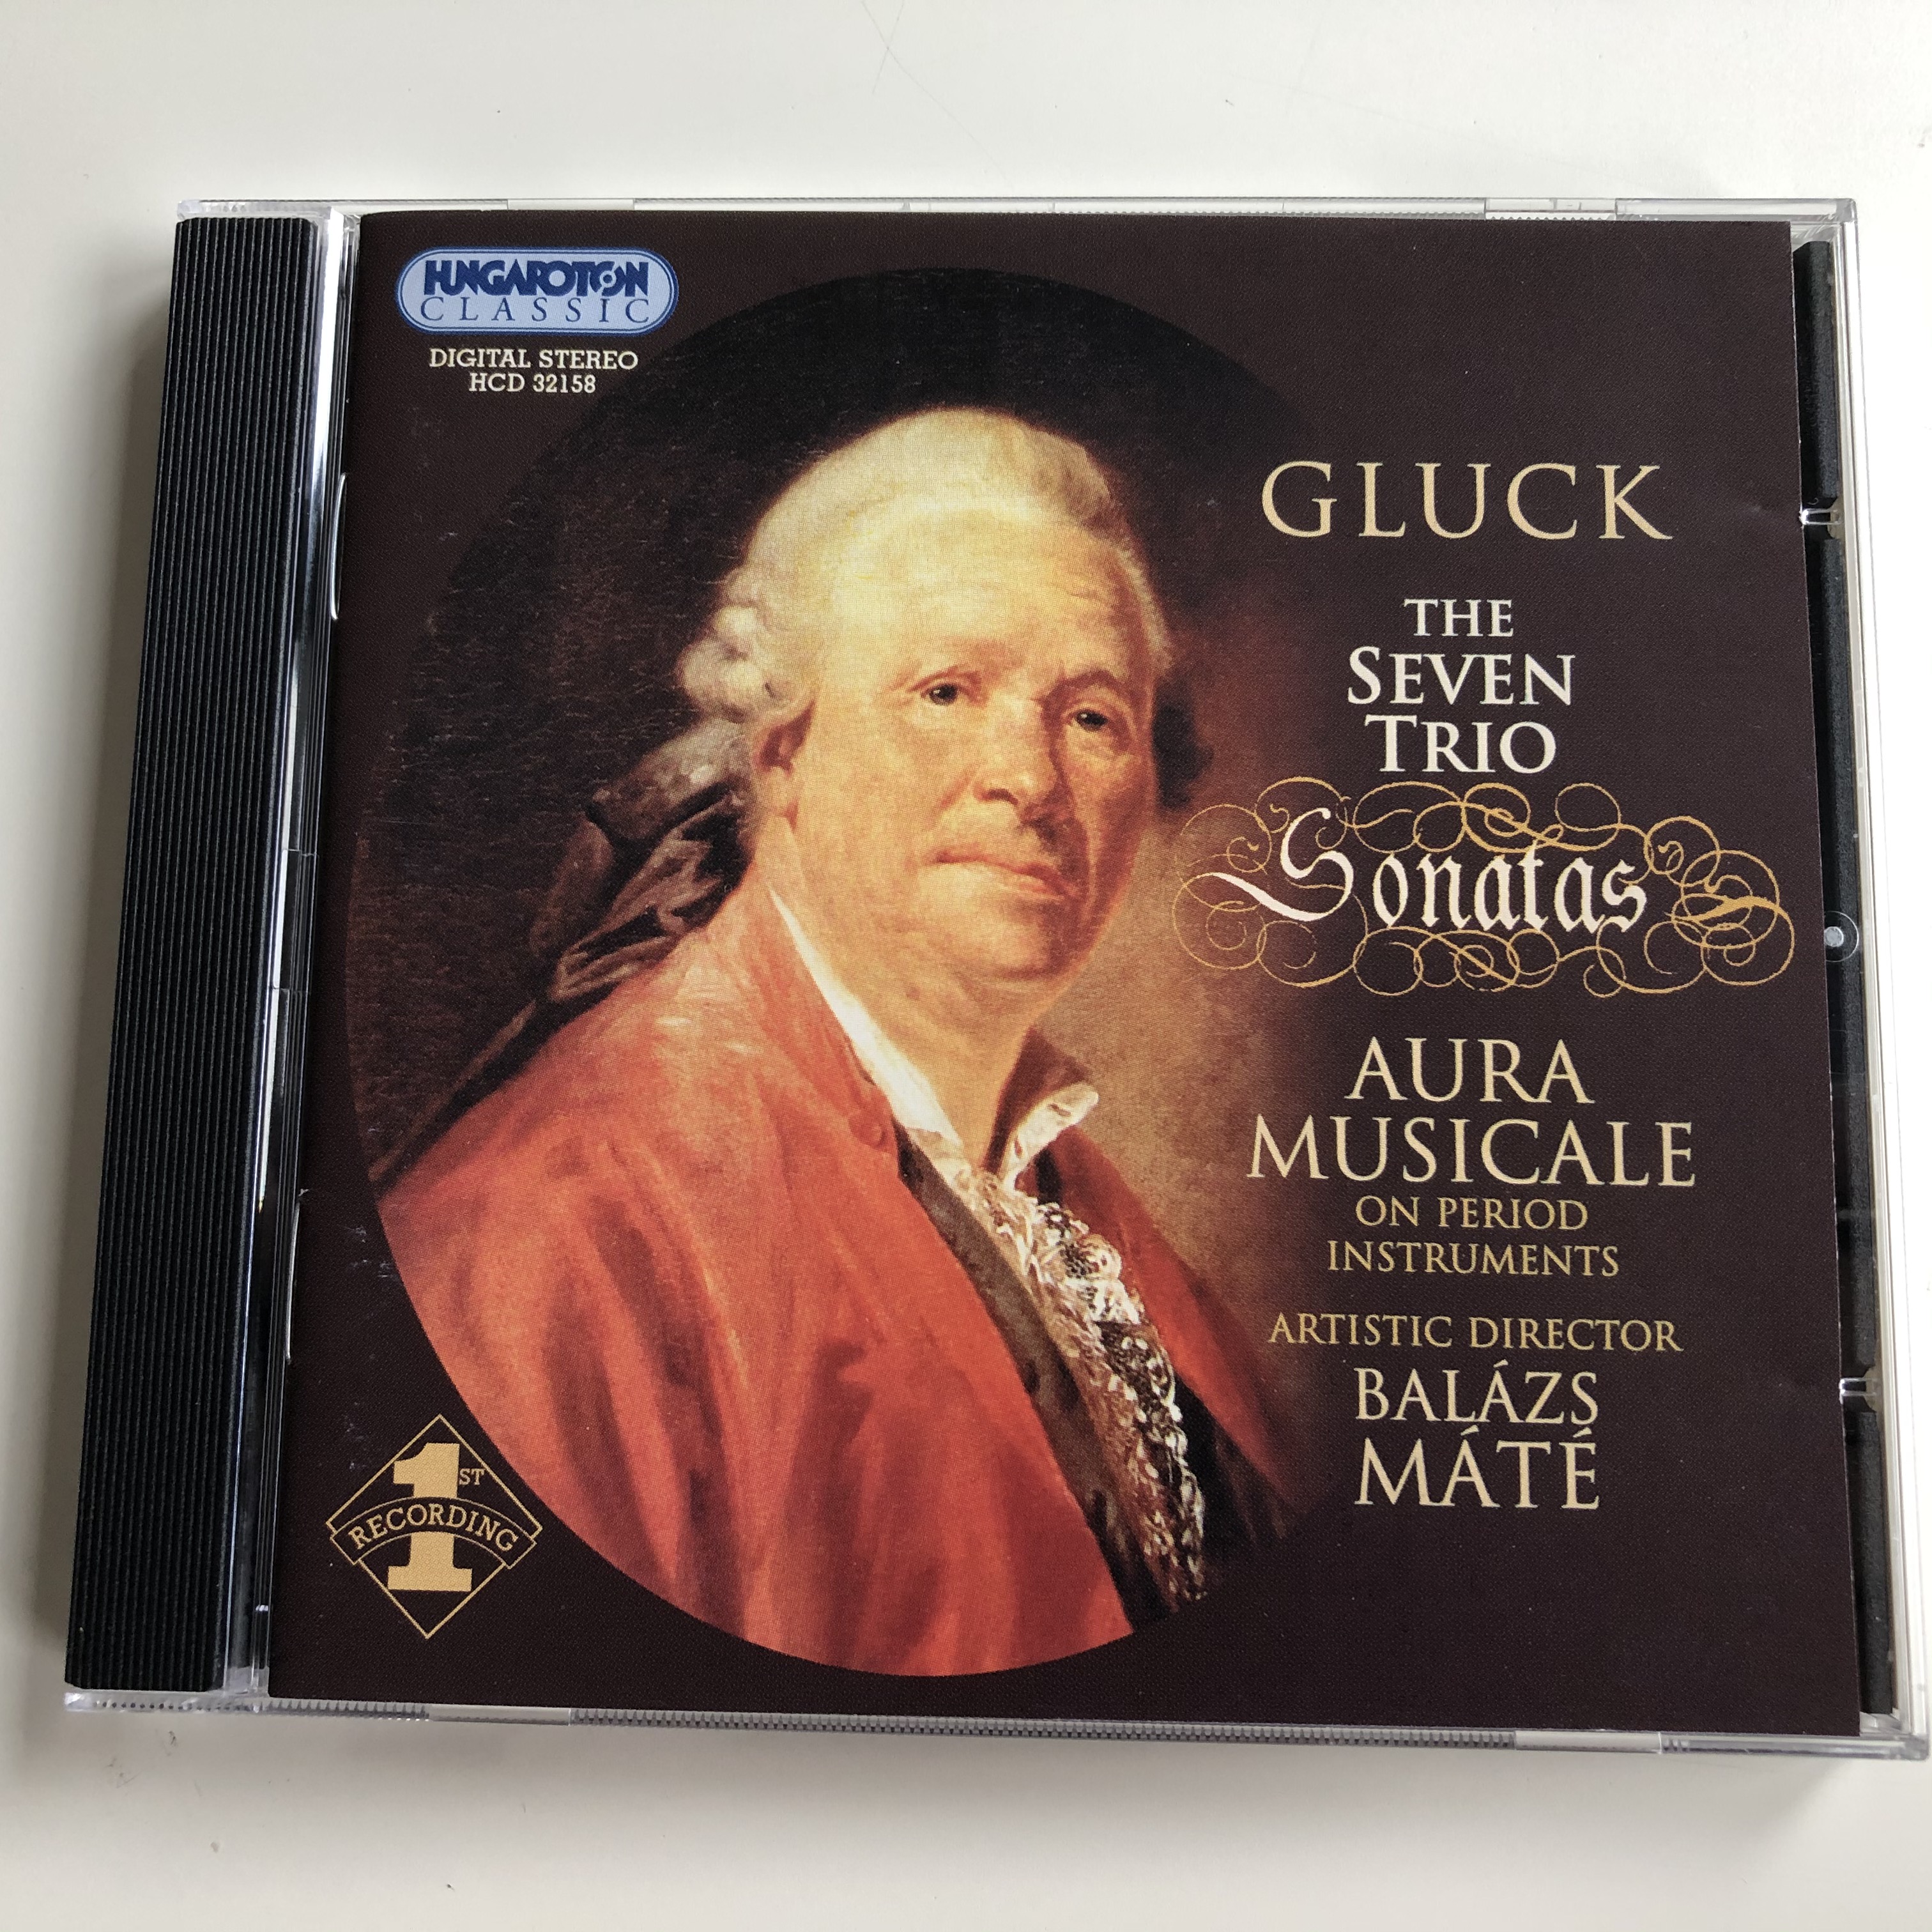 gluck-the-seven-trio-sonatas-aura-musicale-on-period-instruments-artistic-director-balazs-mate-hungaroton-classic-audio-cd-2003-stereo-hcd-32158-1-.jpg